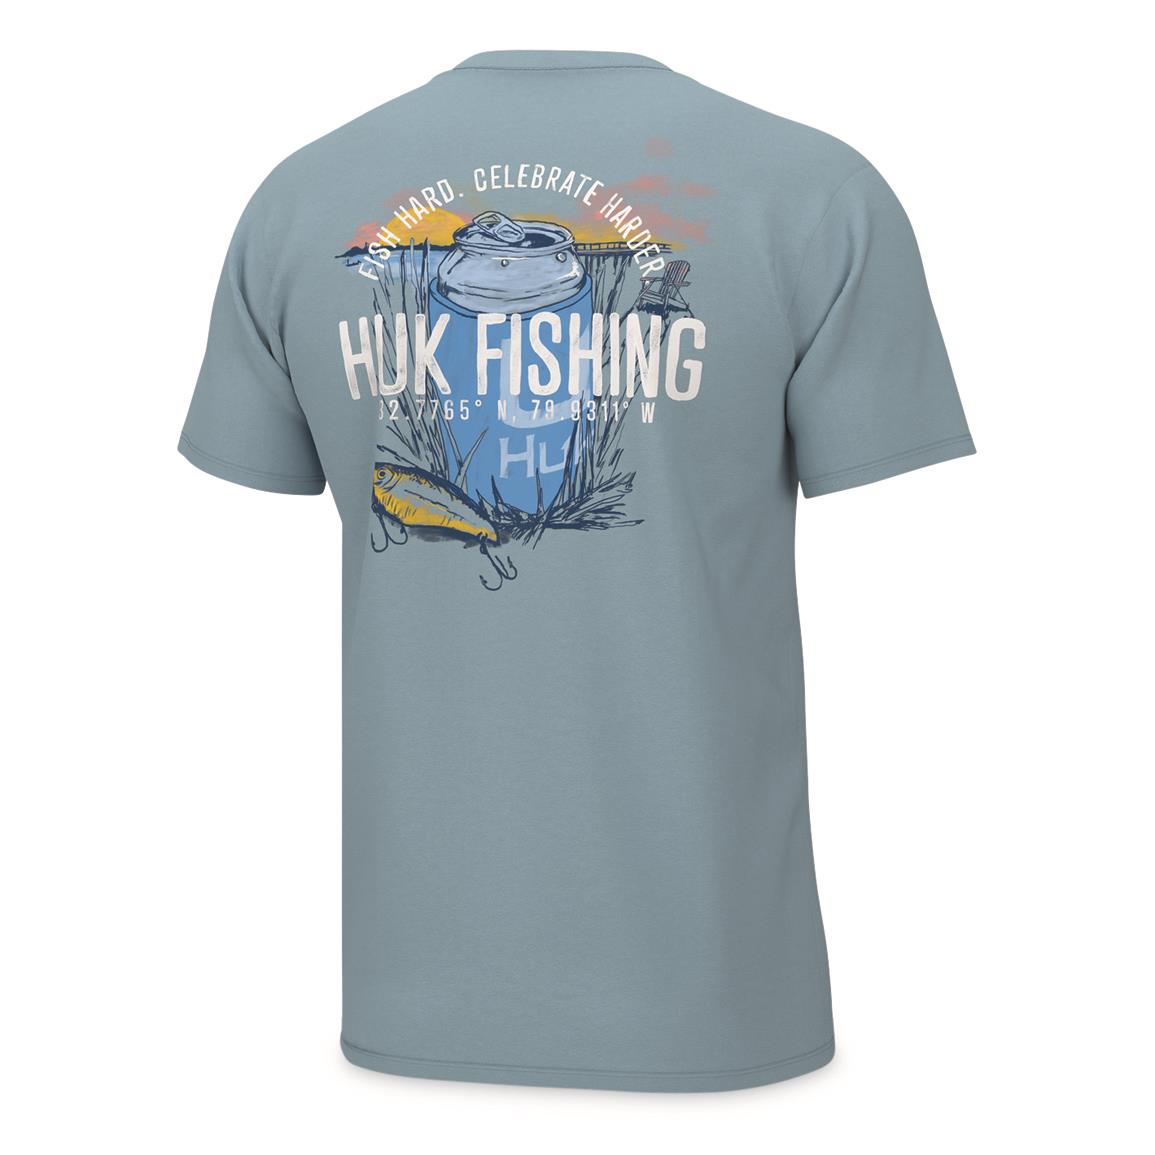 Huk Men's Shore Lunch T-Shirt, Crystal Blue